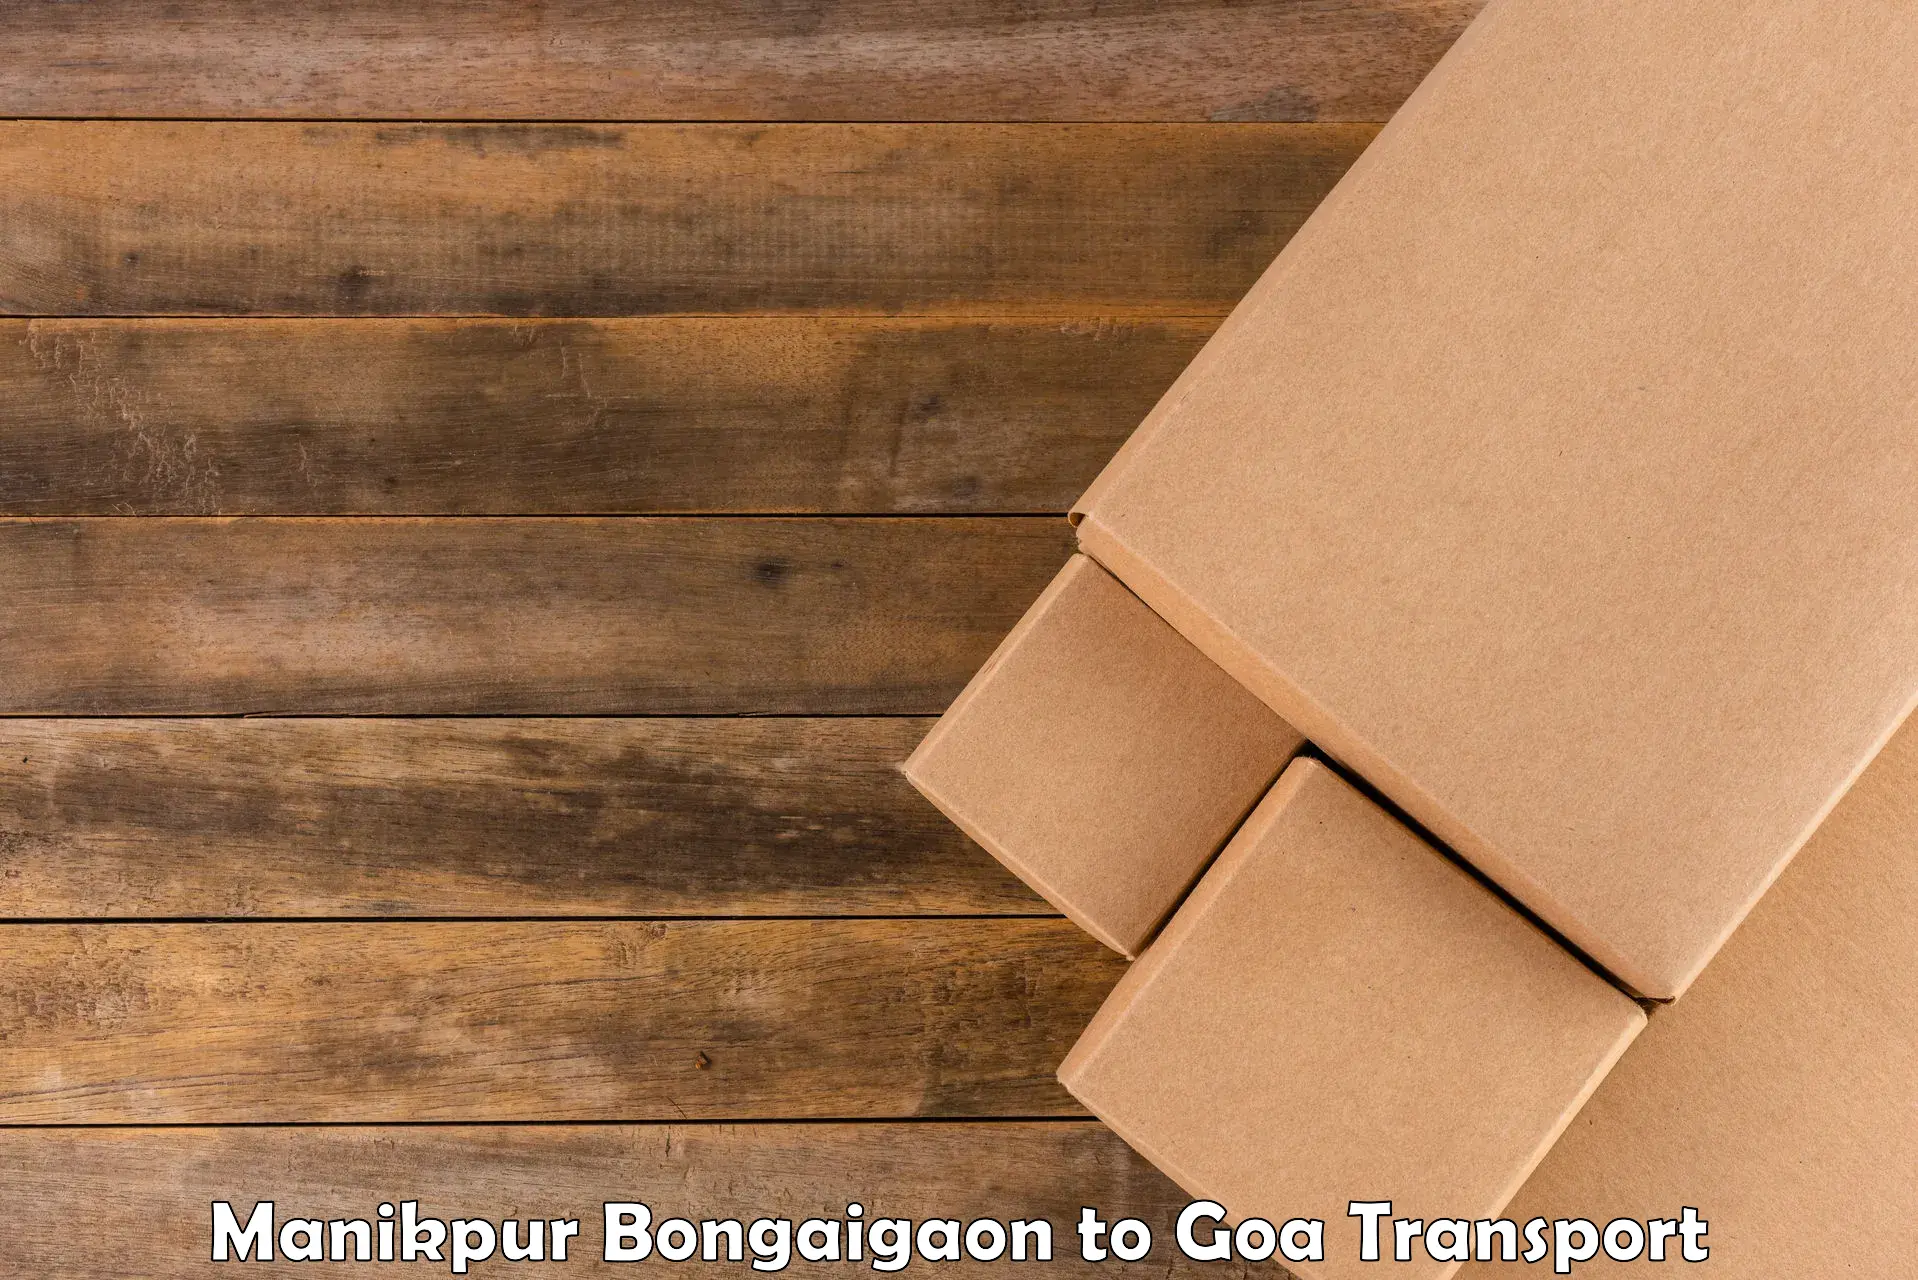 Online transport service Manikpur Bongaigaon to Margao